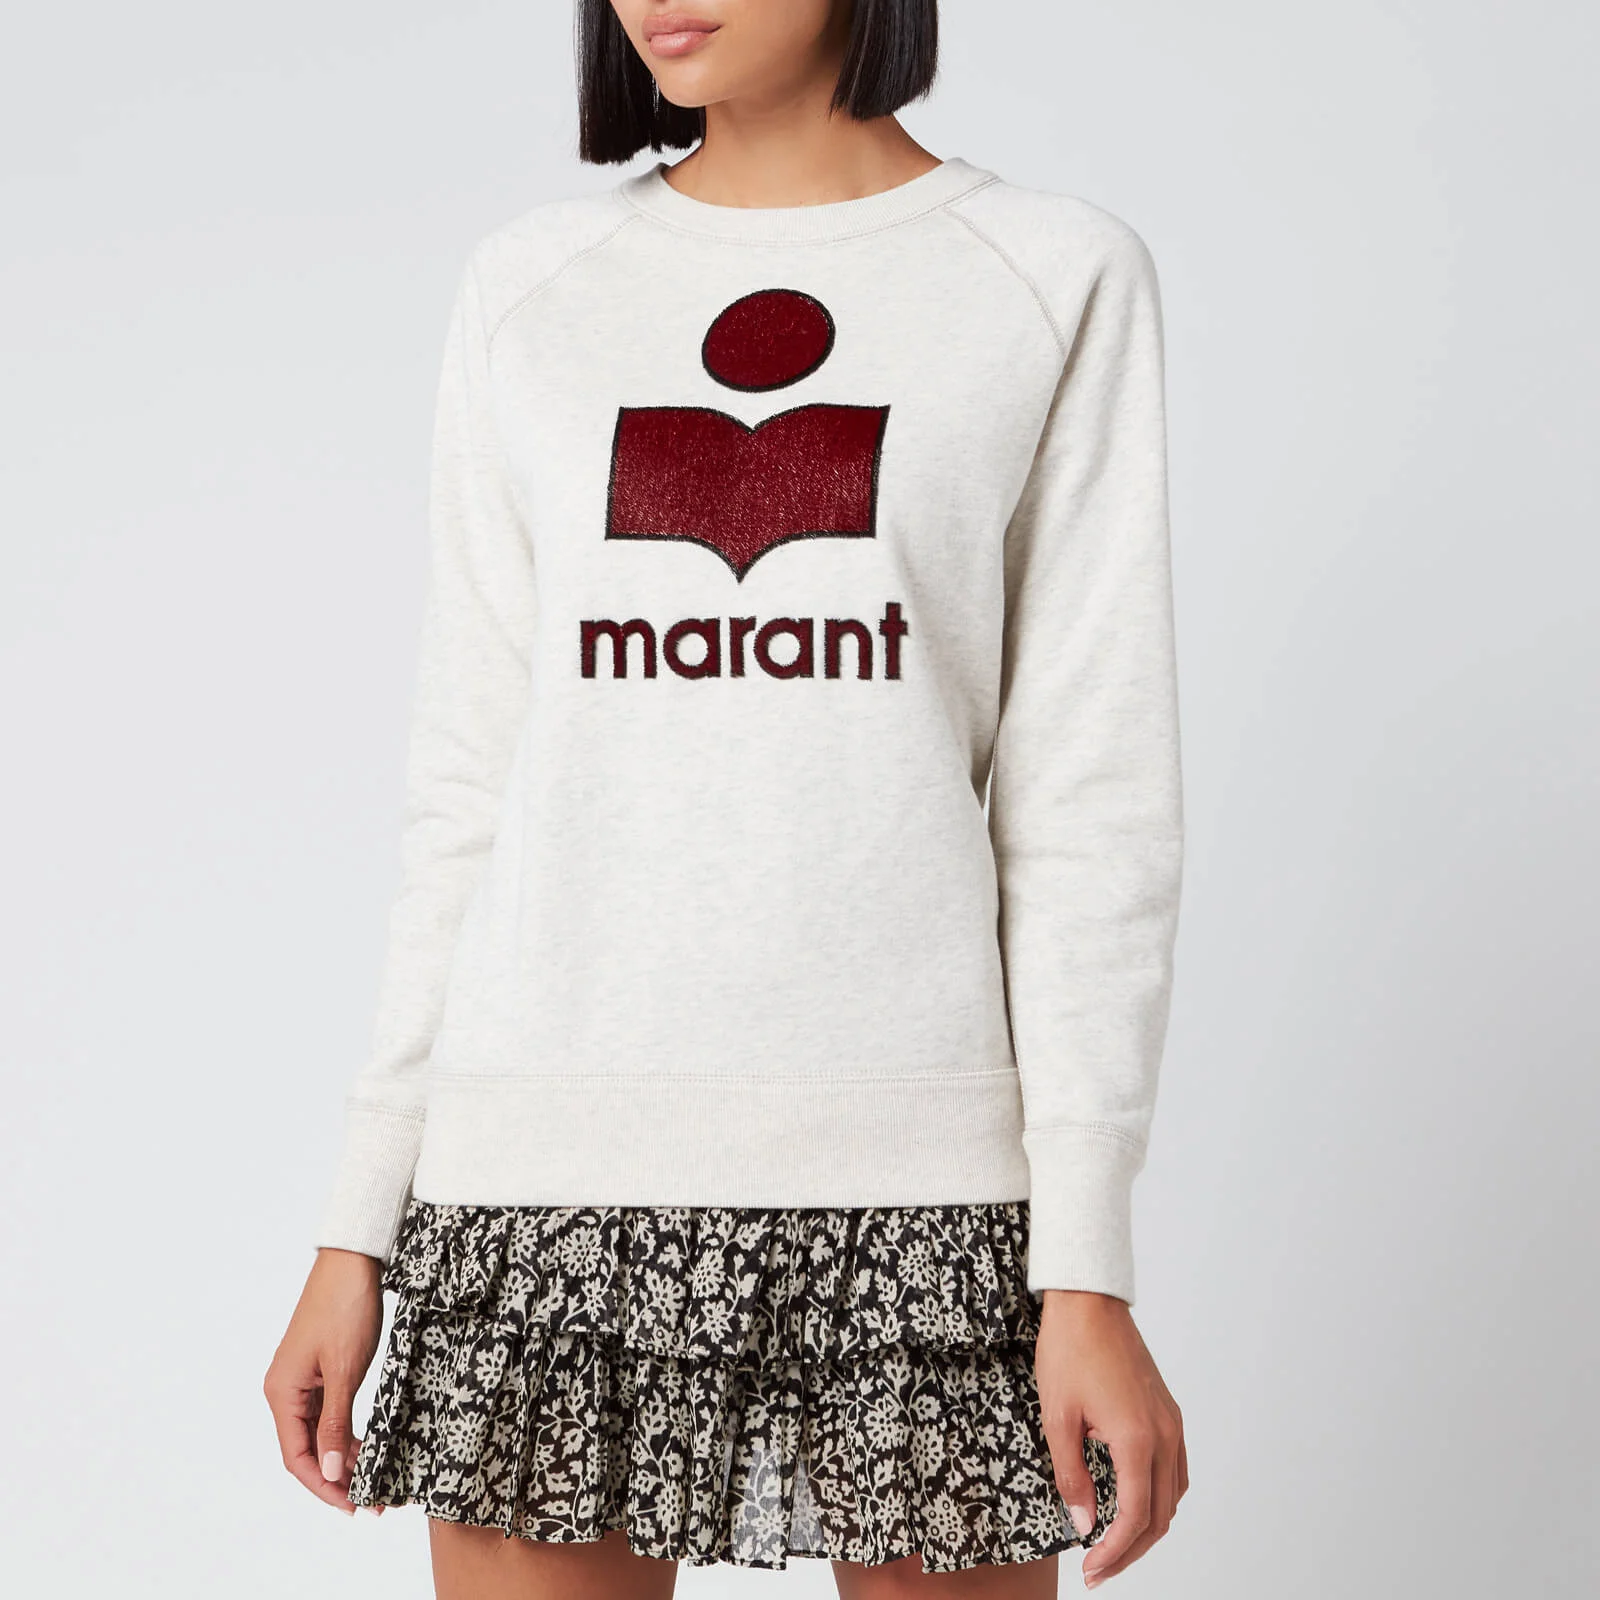 Marant Etoile Women's Milly Sweatshirt - Ecru/Red Image 1